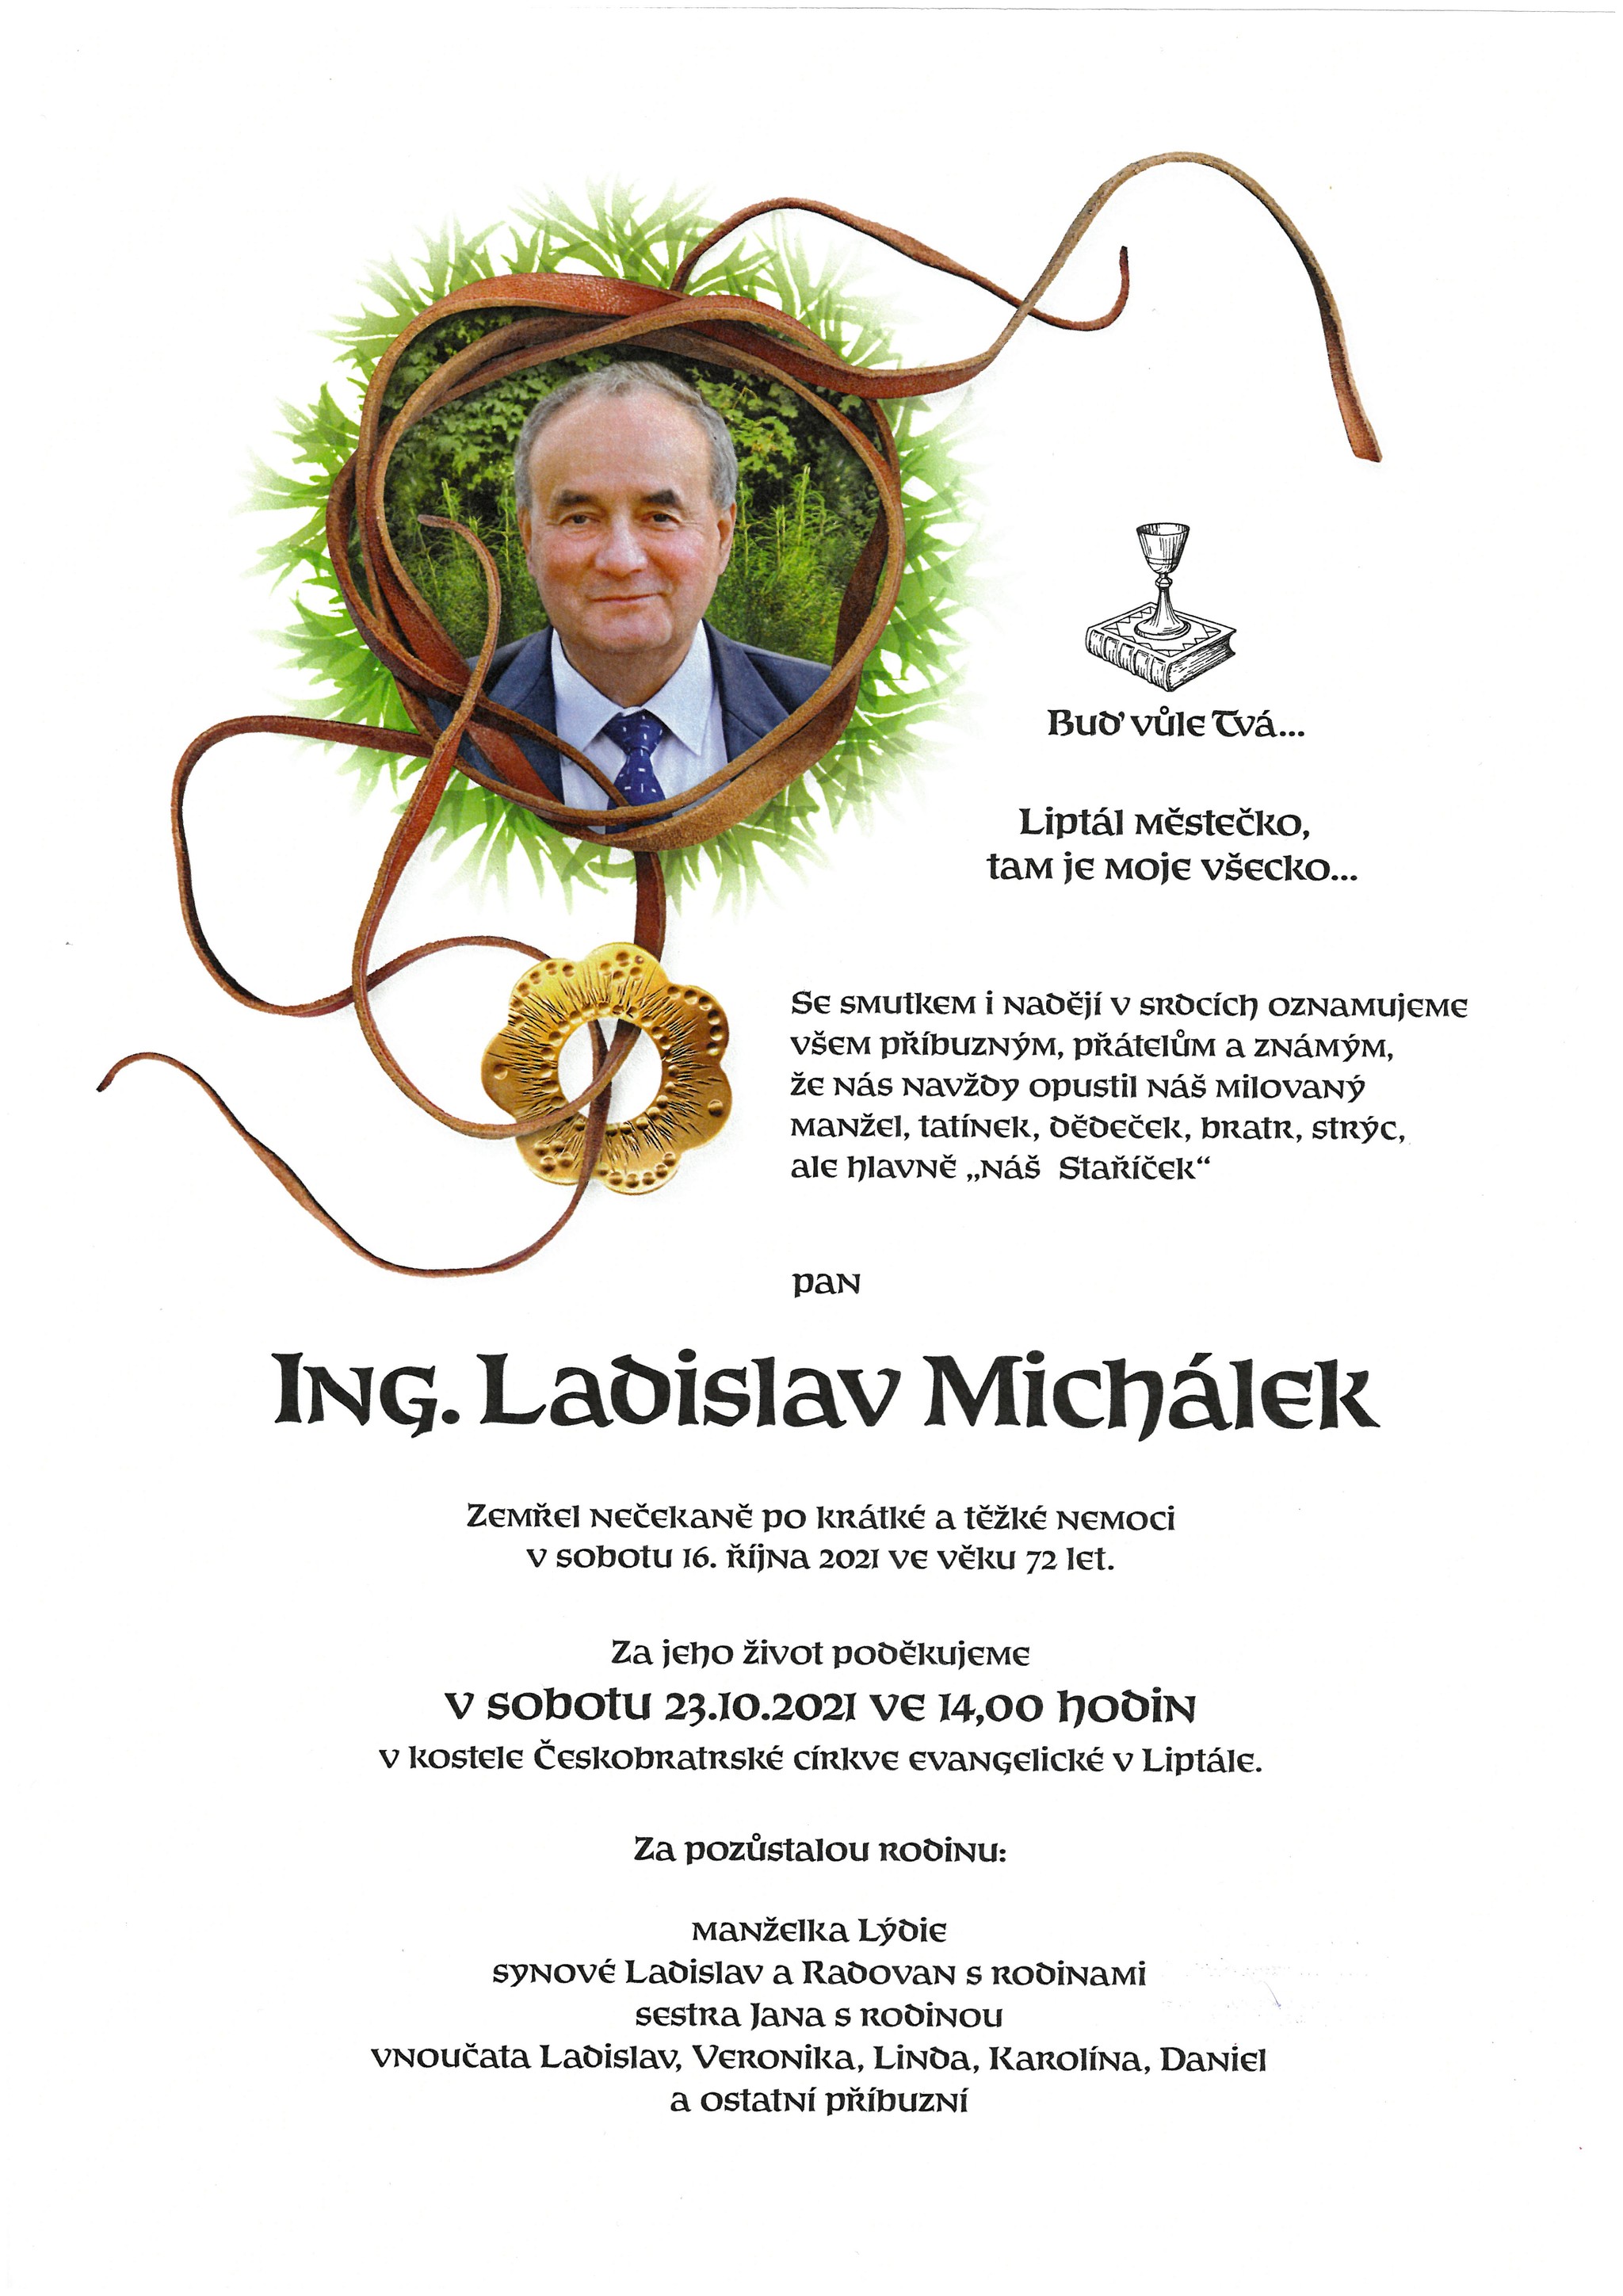 Ing. Ladislav Michálek